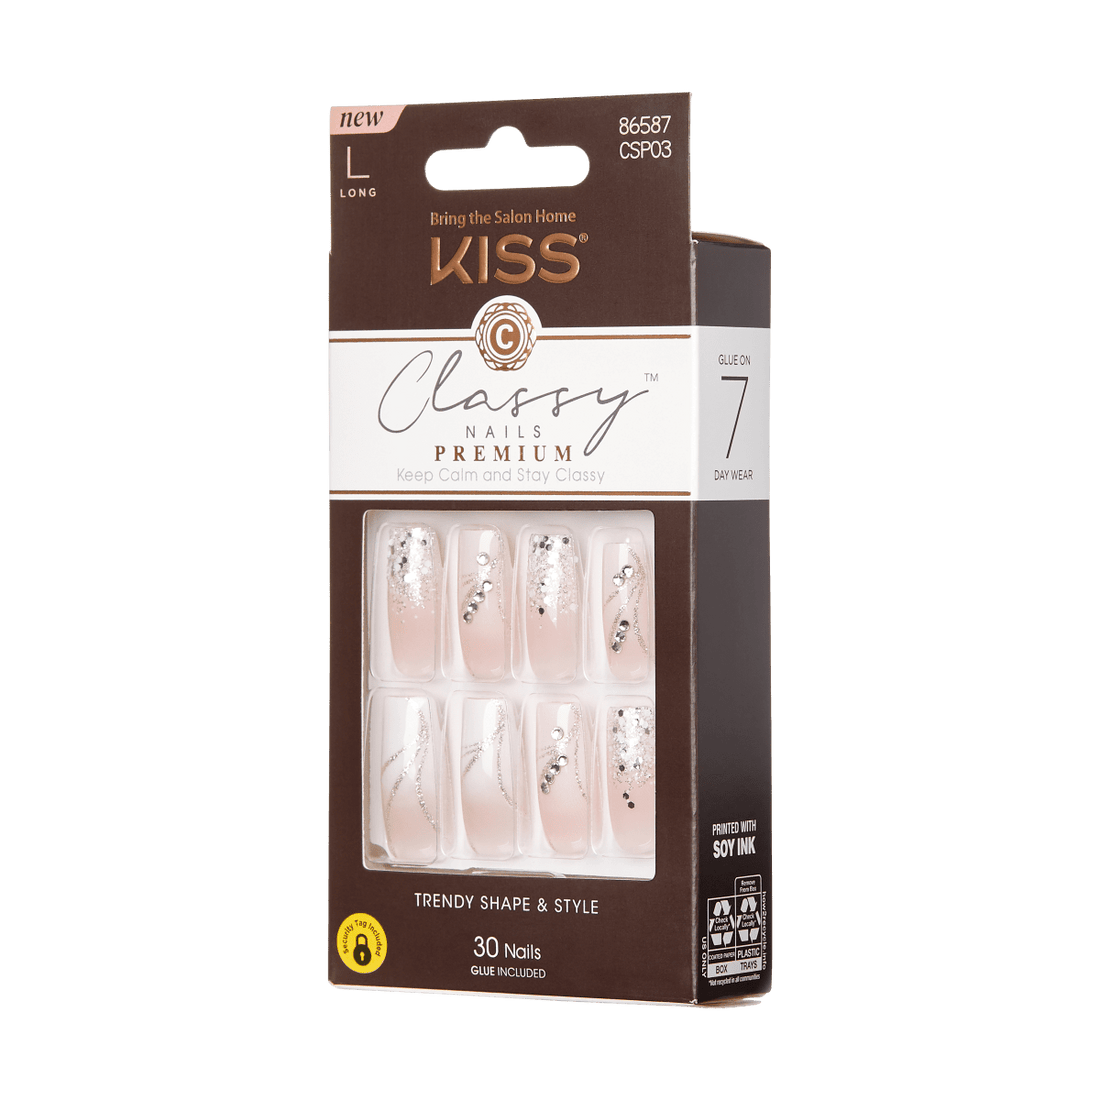 KISS Classy Nails Premium, Press-On Nails, Stunning!, Pink, Long Square, 30ct